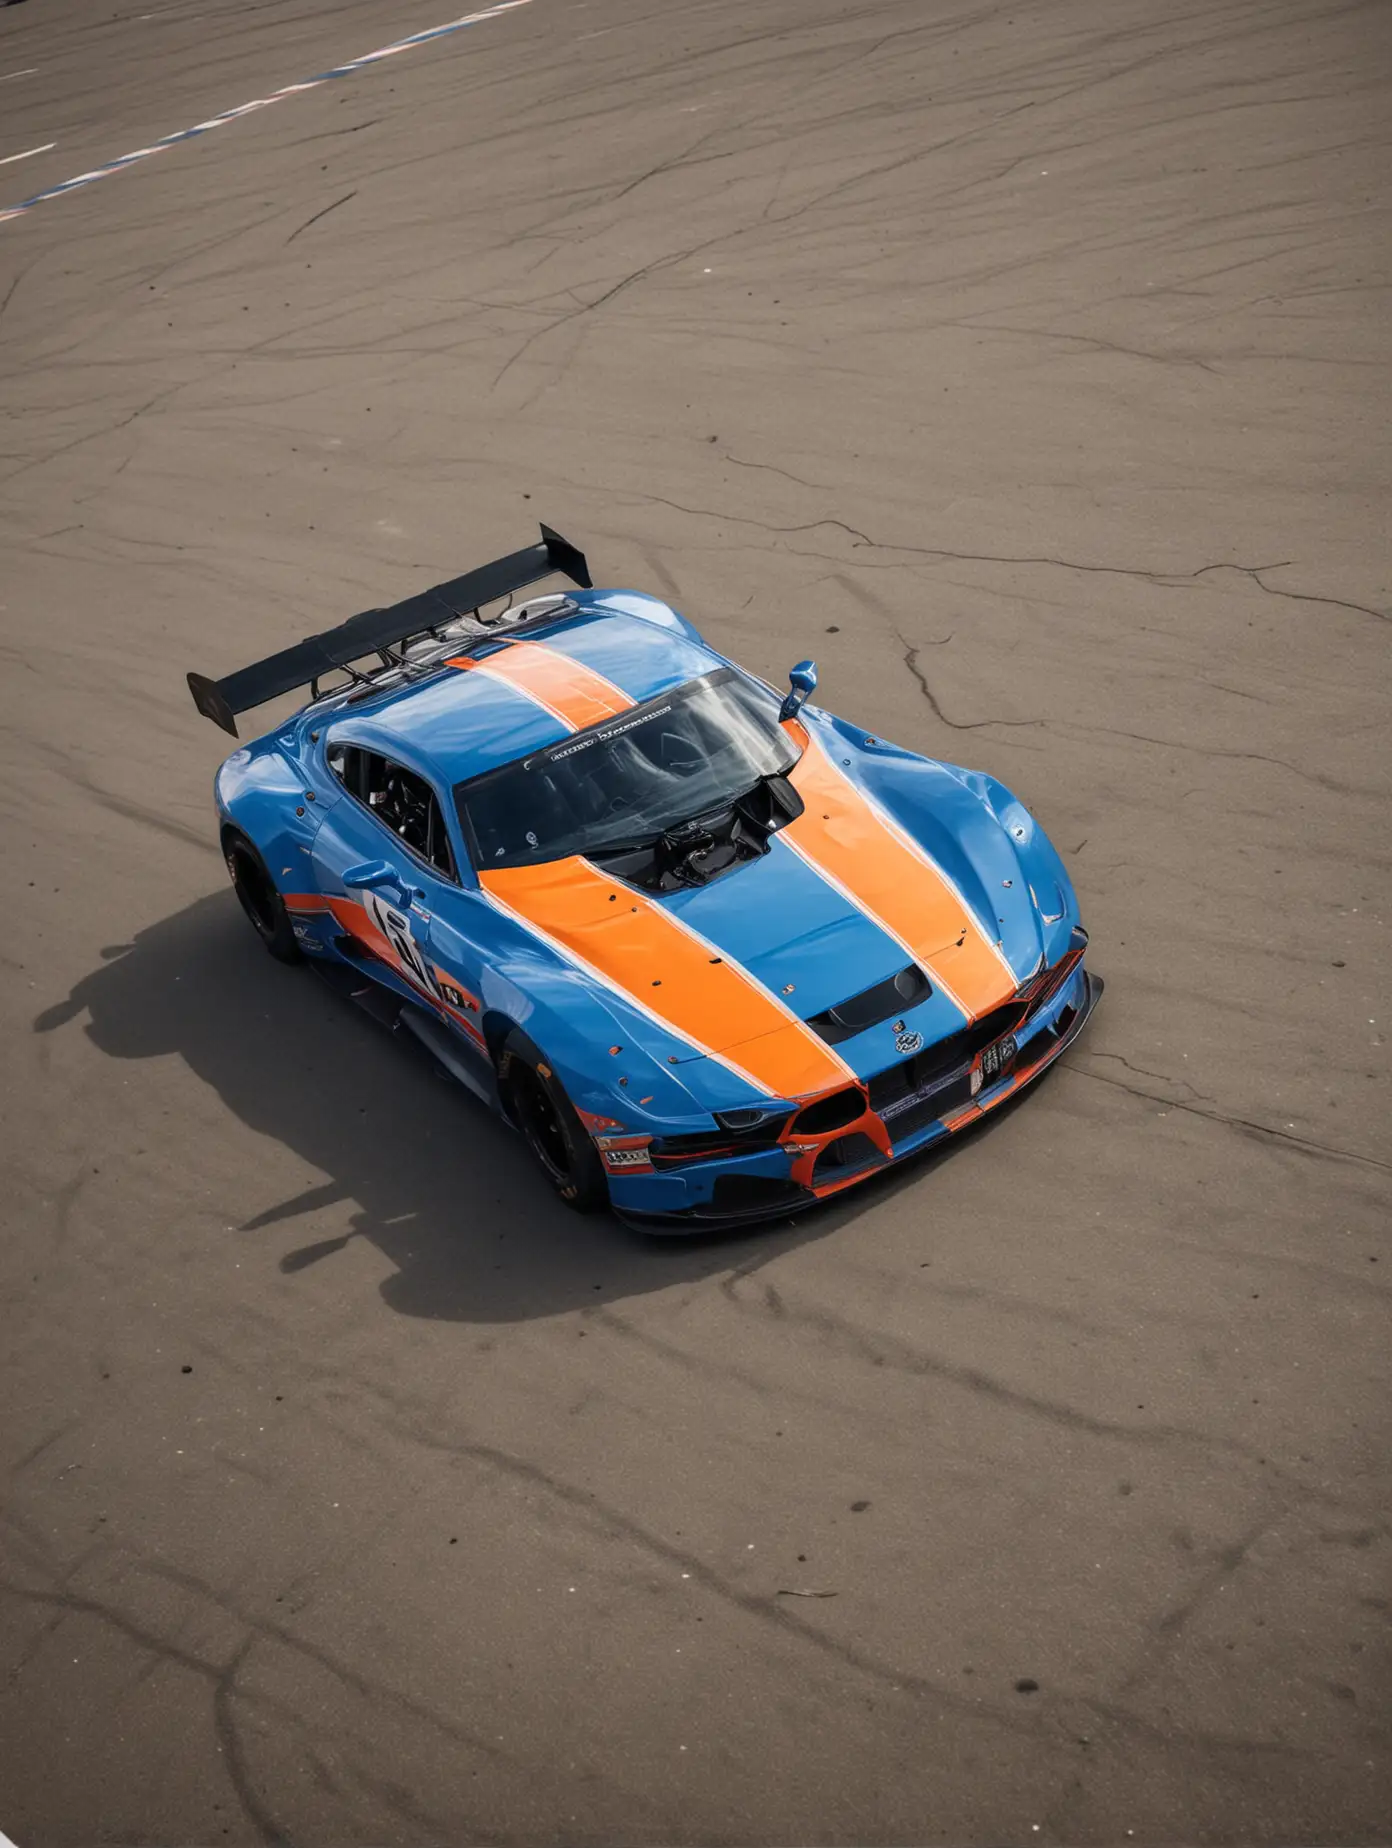 Speeding Race Car with Vibrant Orange and Blue Stripes